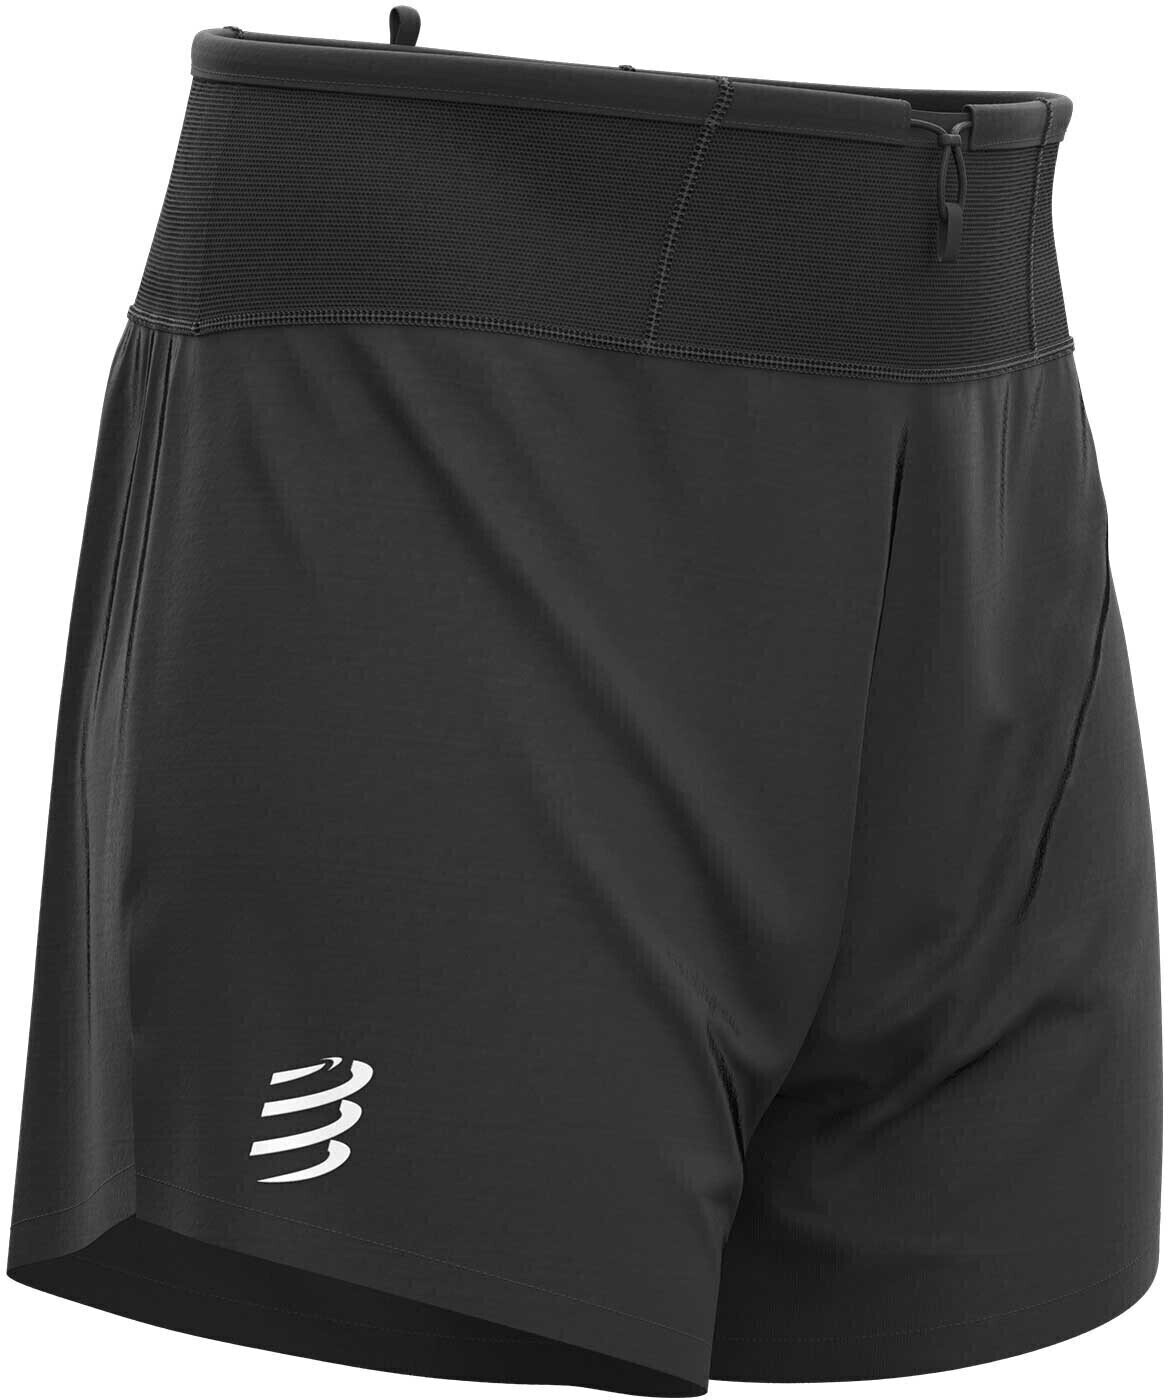 Pantalones cortos para correr Compressport Trail Racing Short Black S Pantalones cortos para correr